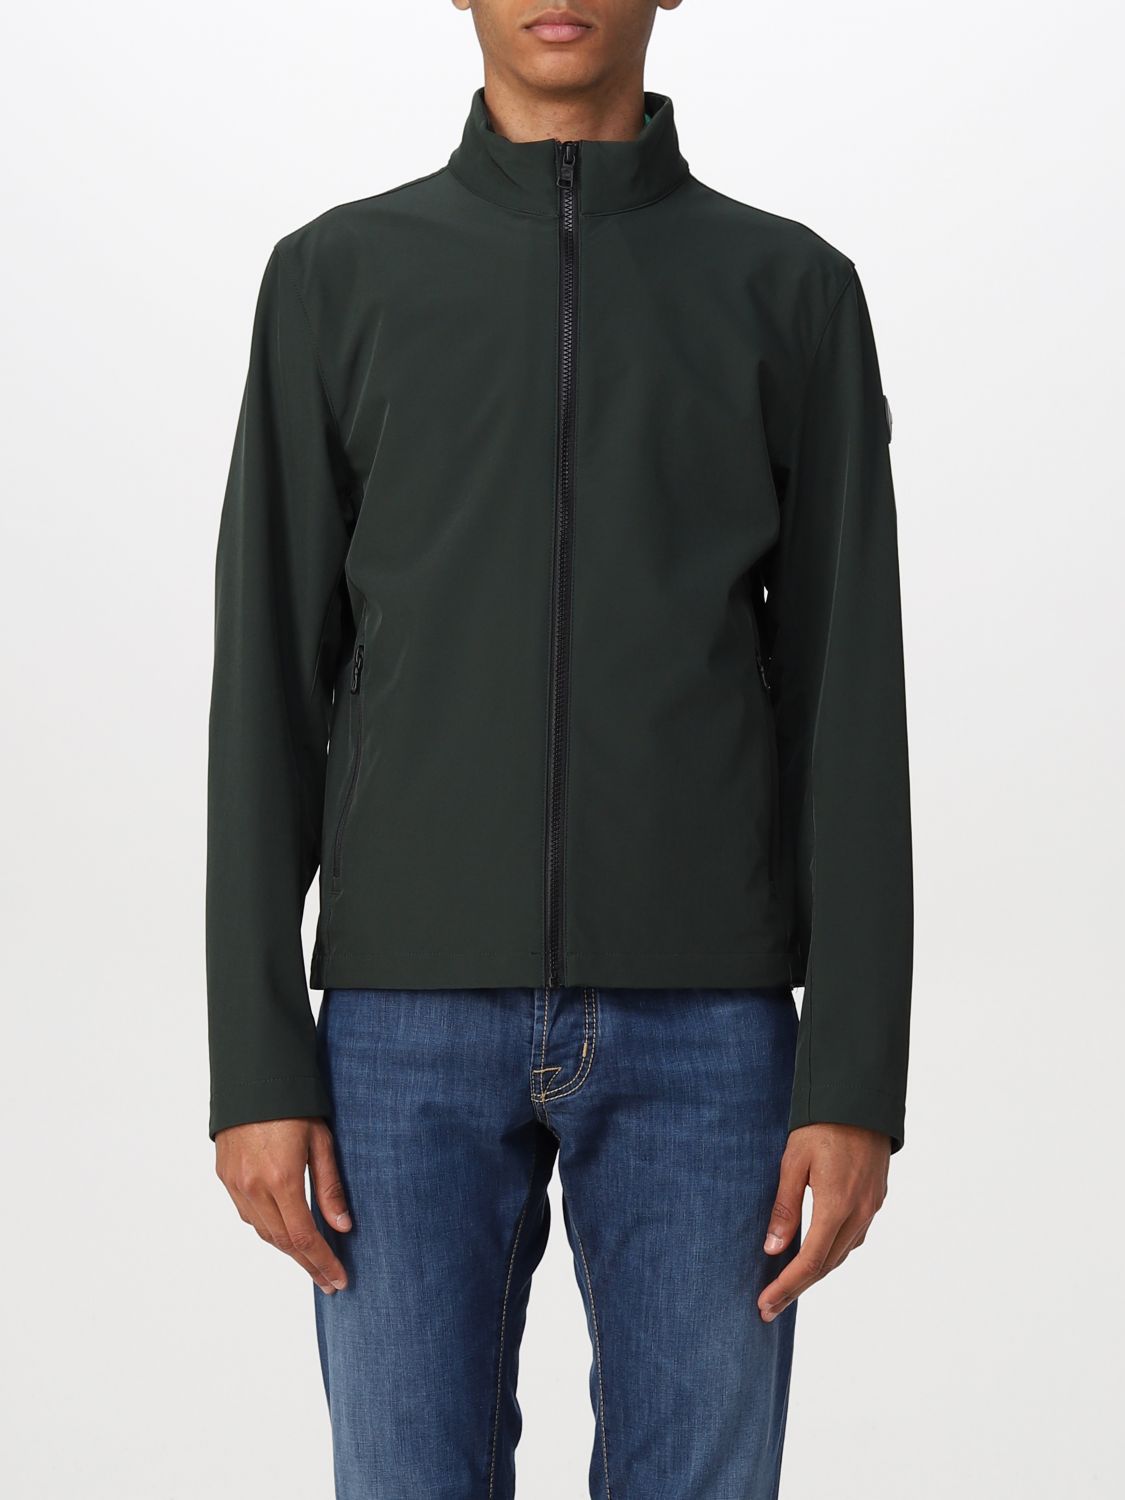 COLMAR: Jacket men - Green | COLMAR jacket 18656WV online at GIGLIO.COM